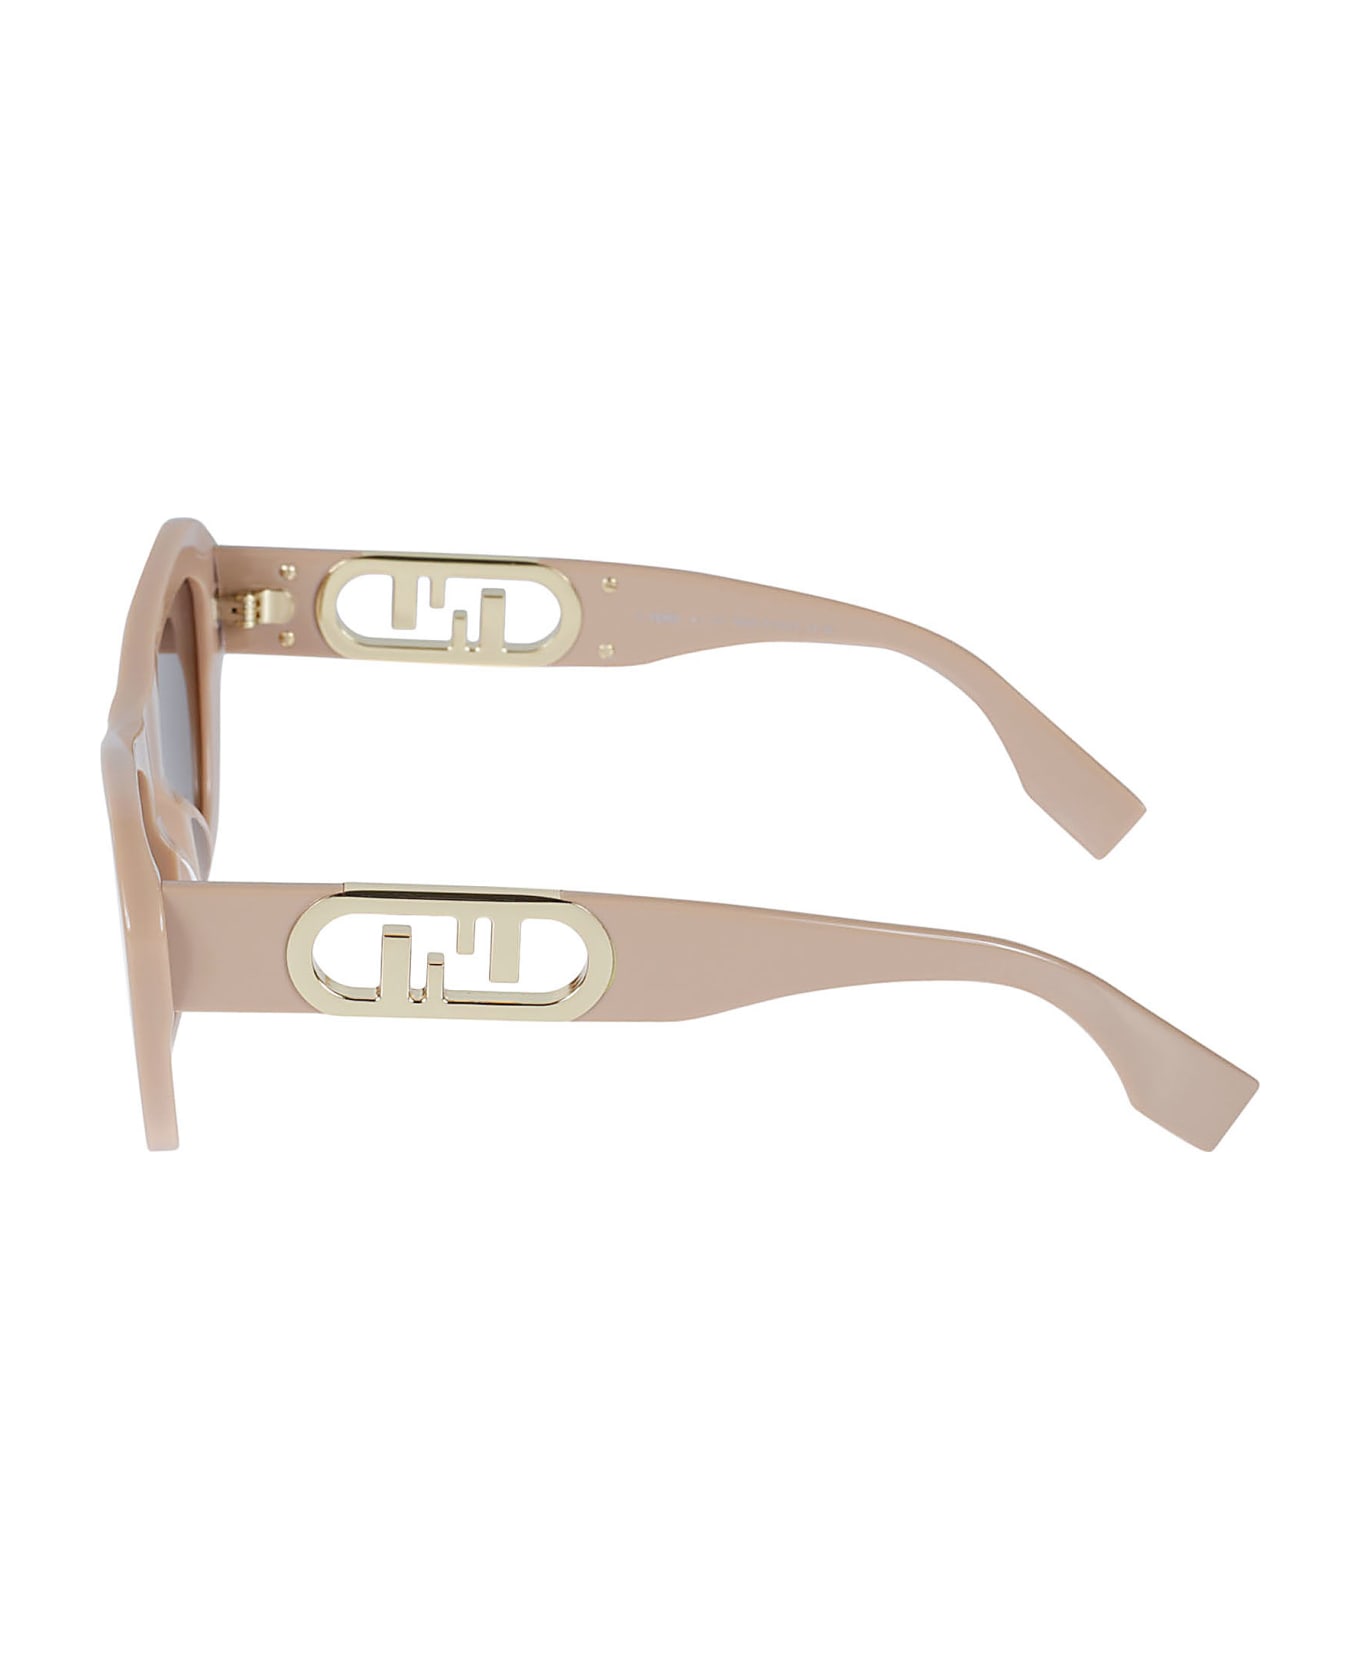 Fendi Eyewear Wayfarer Sunglasses Drift - 57e